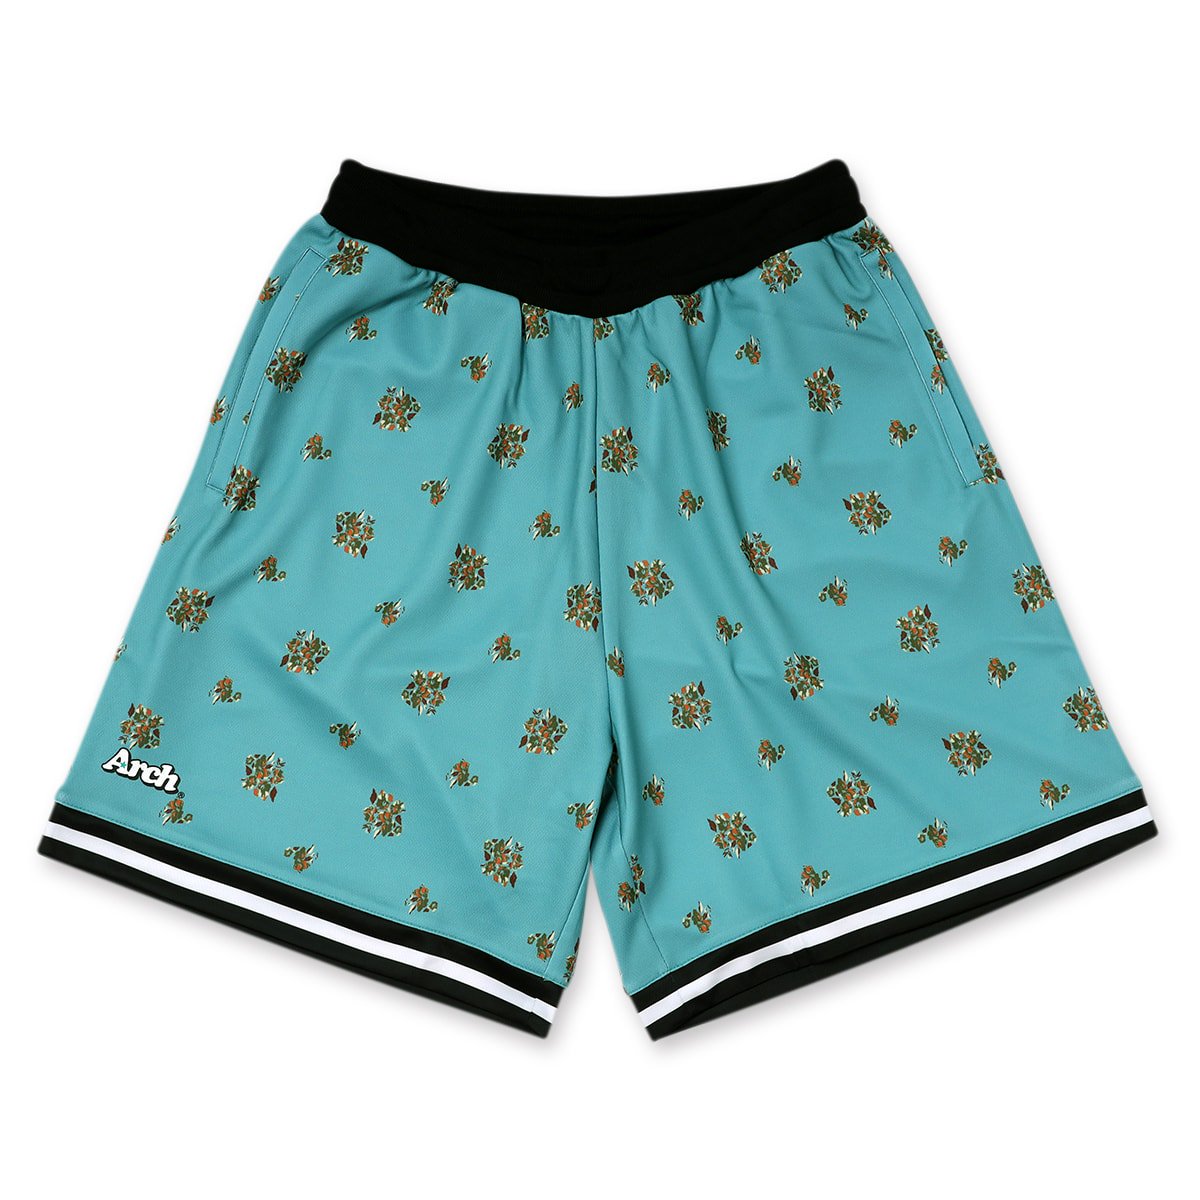 floral sport shorts【nile blue】